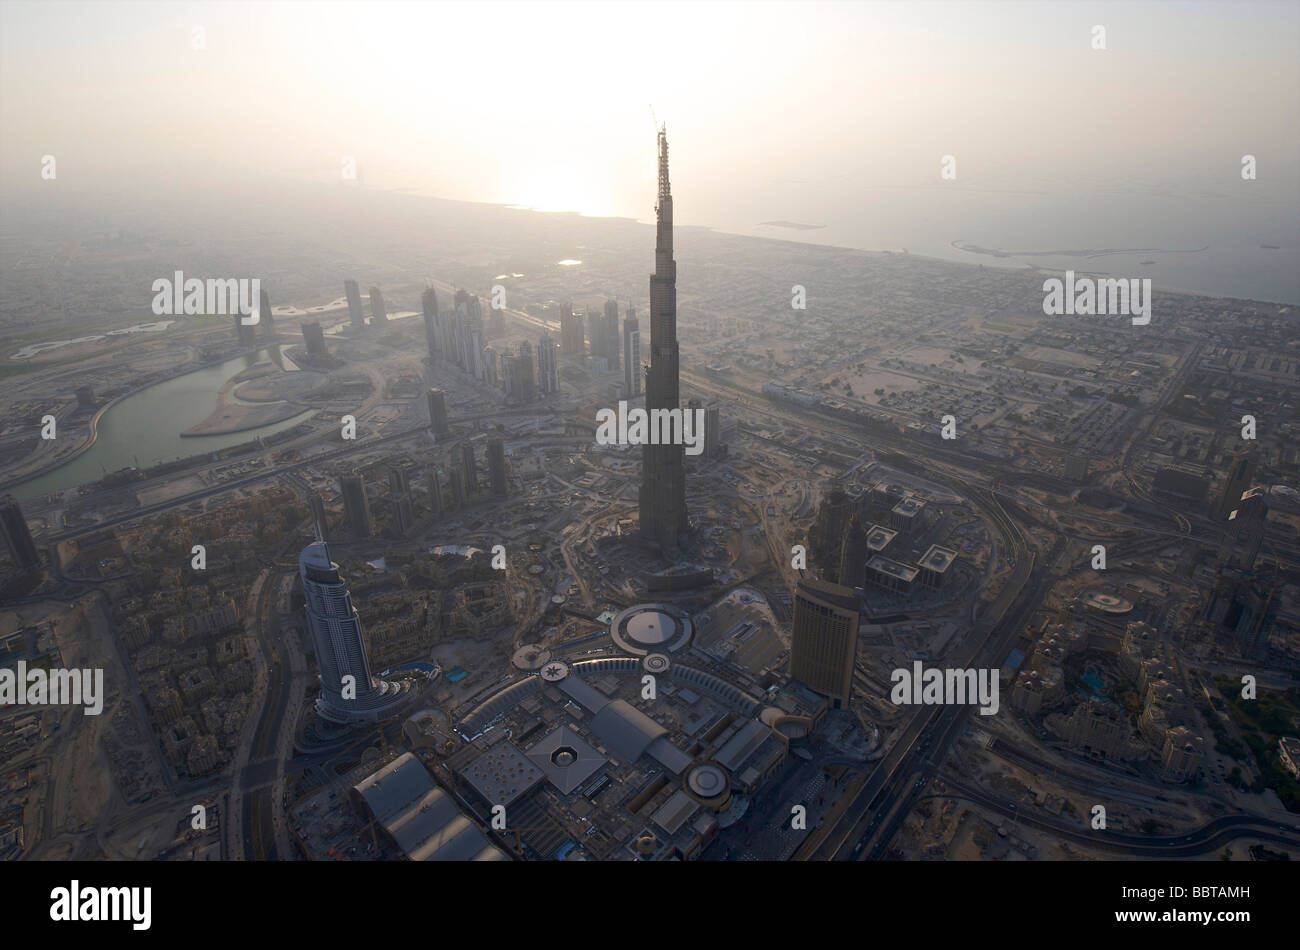 Dubai Burj Dubai the tallest building in the world Stock Photo